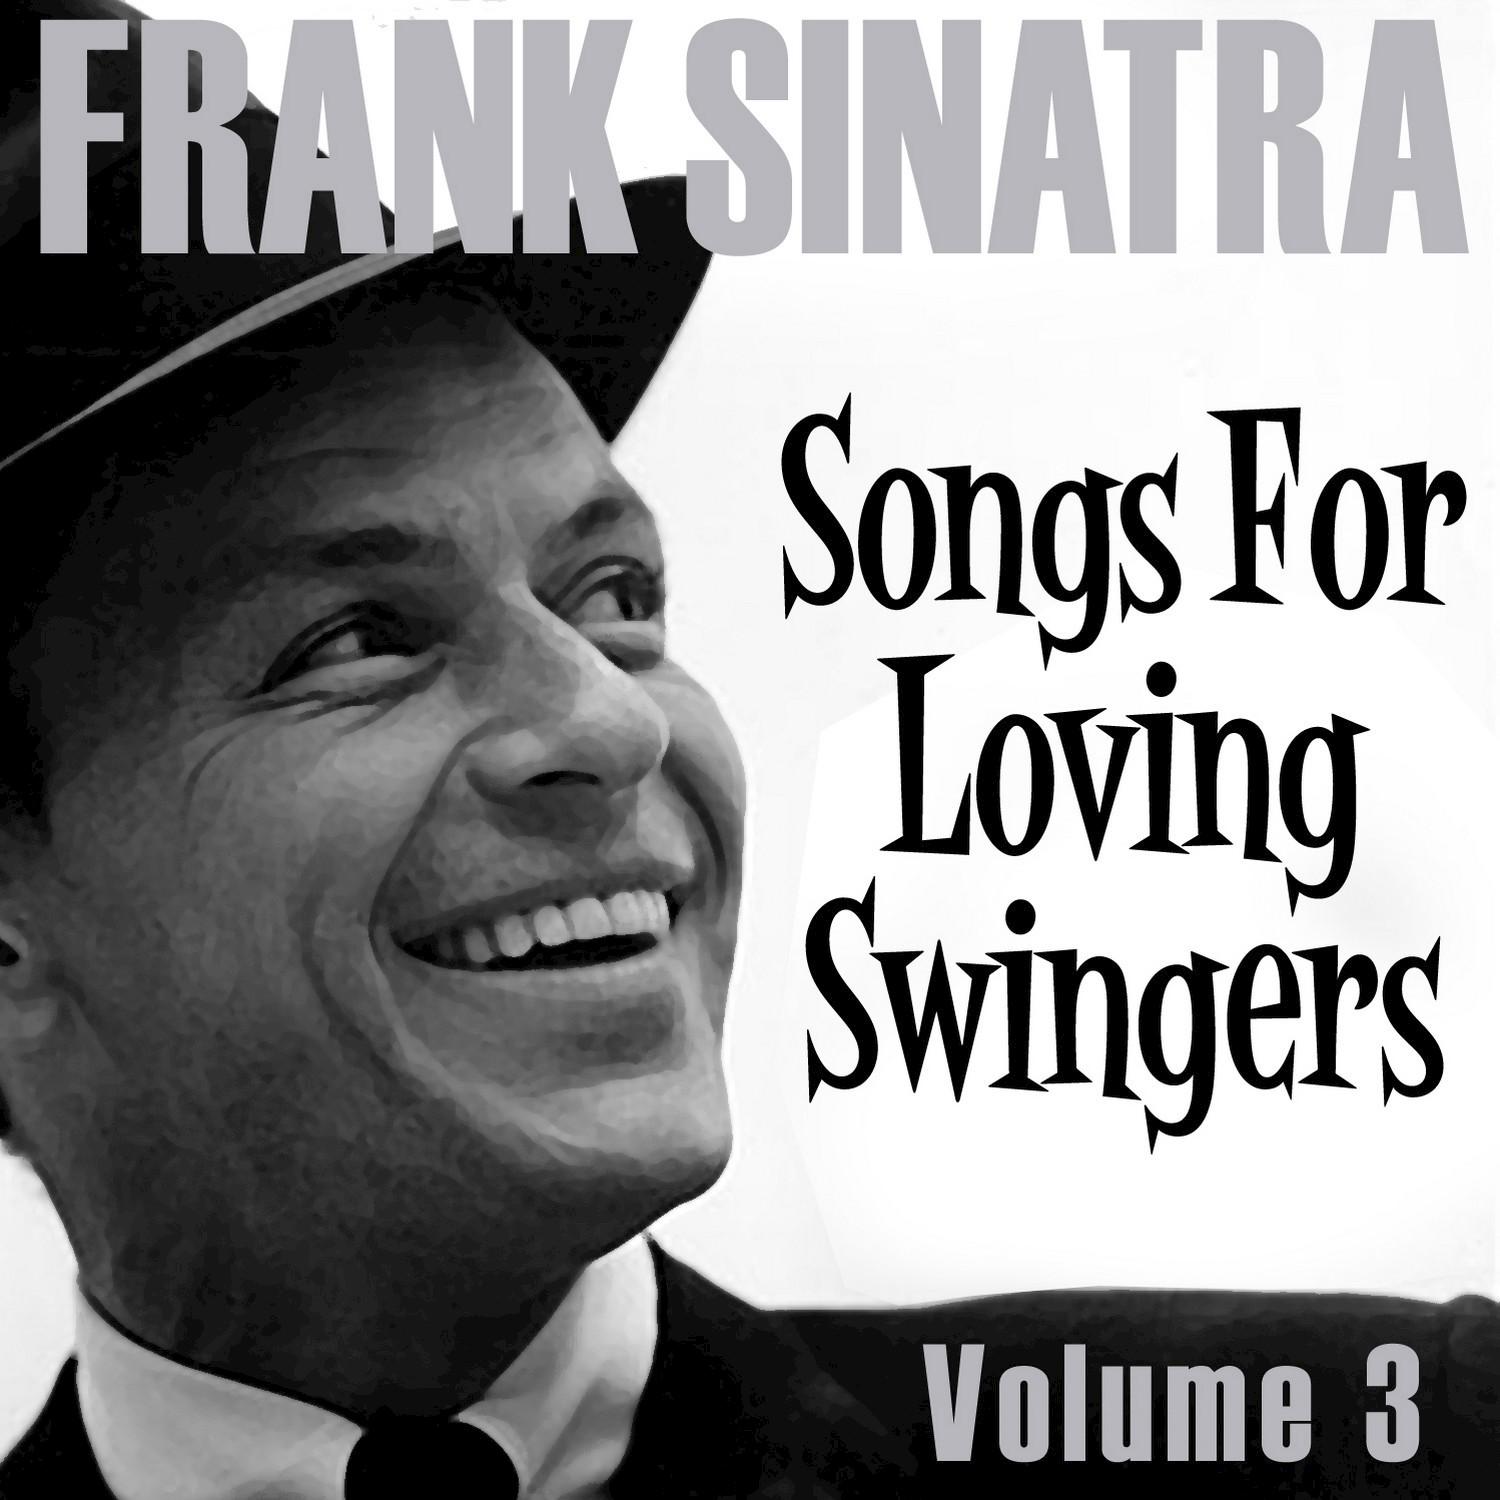 Frank Sinatra - Songs for Loving Swingers, Vol. 3